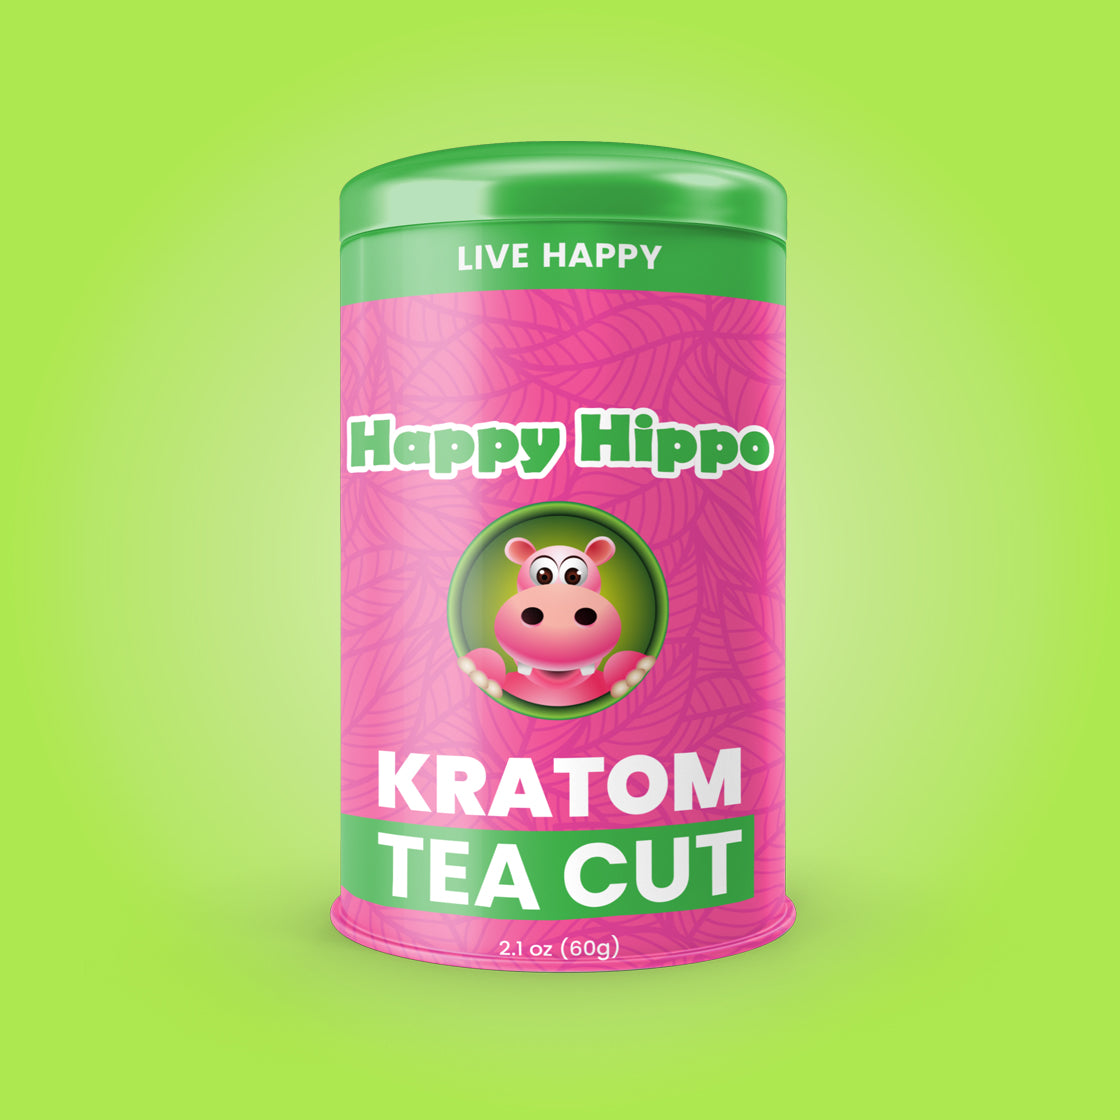 Product Image depicting a 2.1oz tin of Happy Hippo loose-leaf White Maeng Da Kratom Powder (Mitragyna Speciosa).